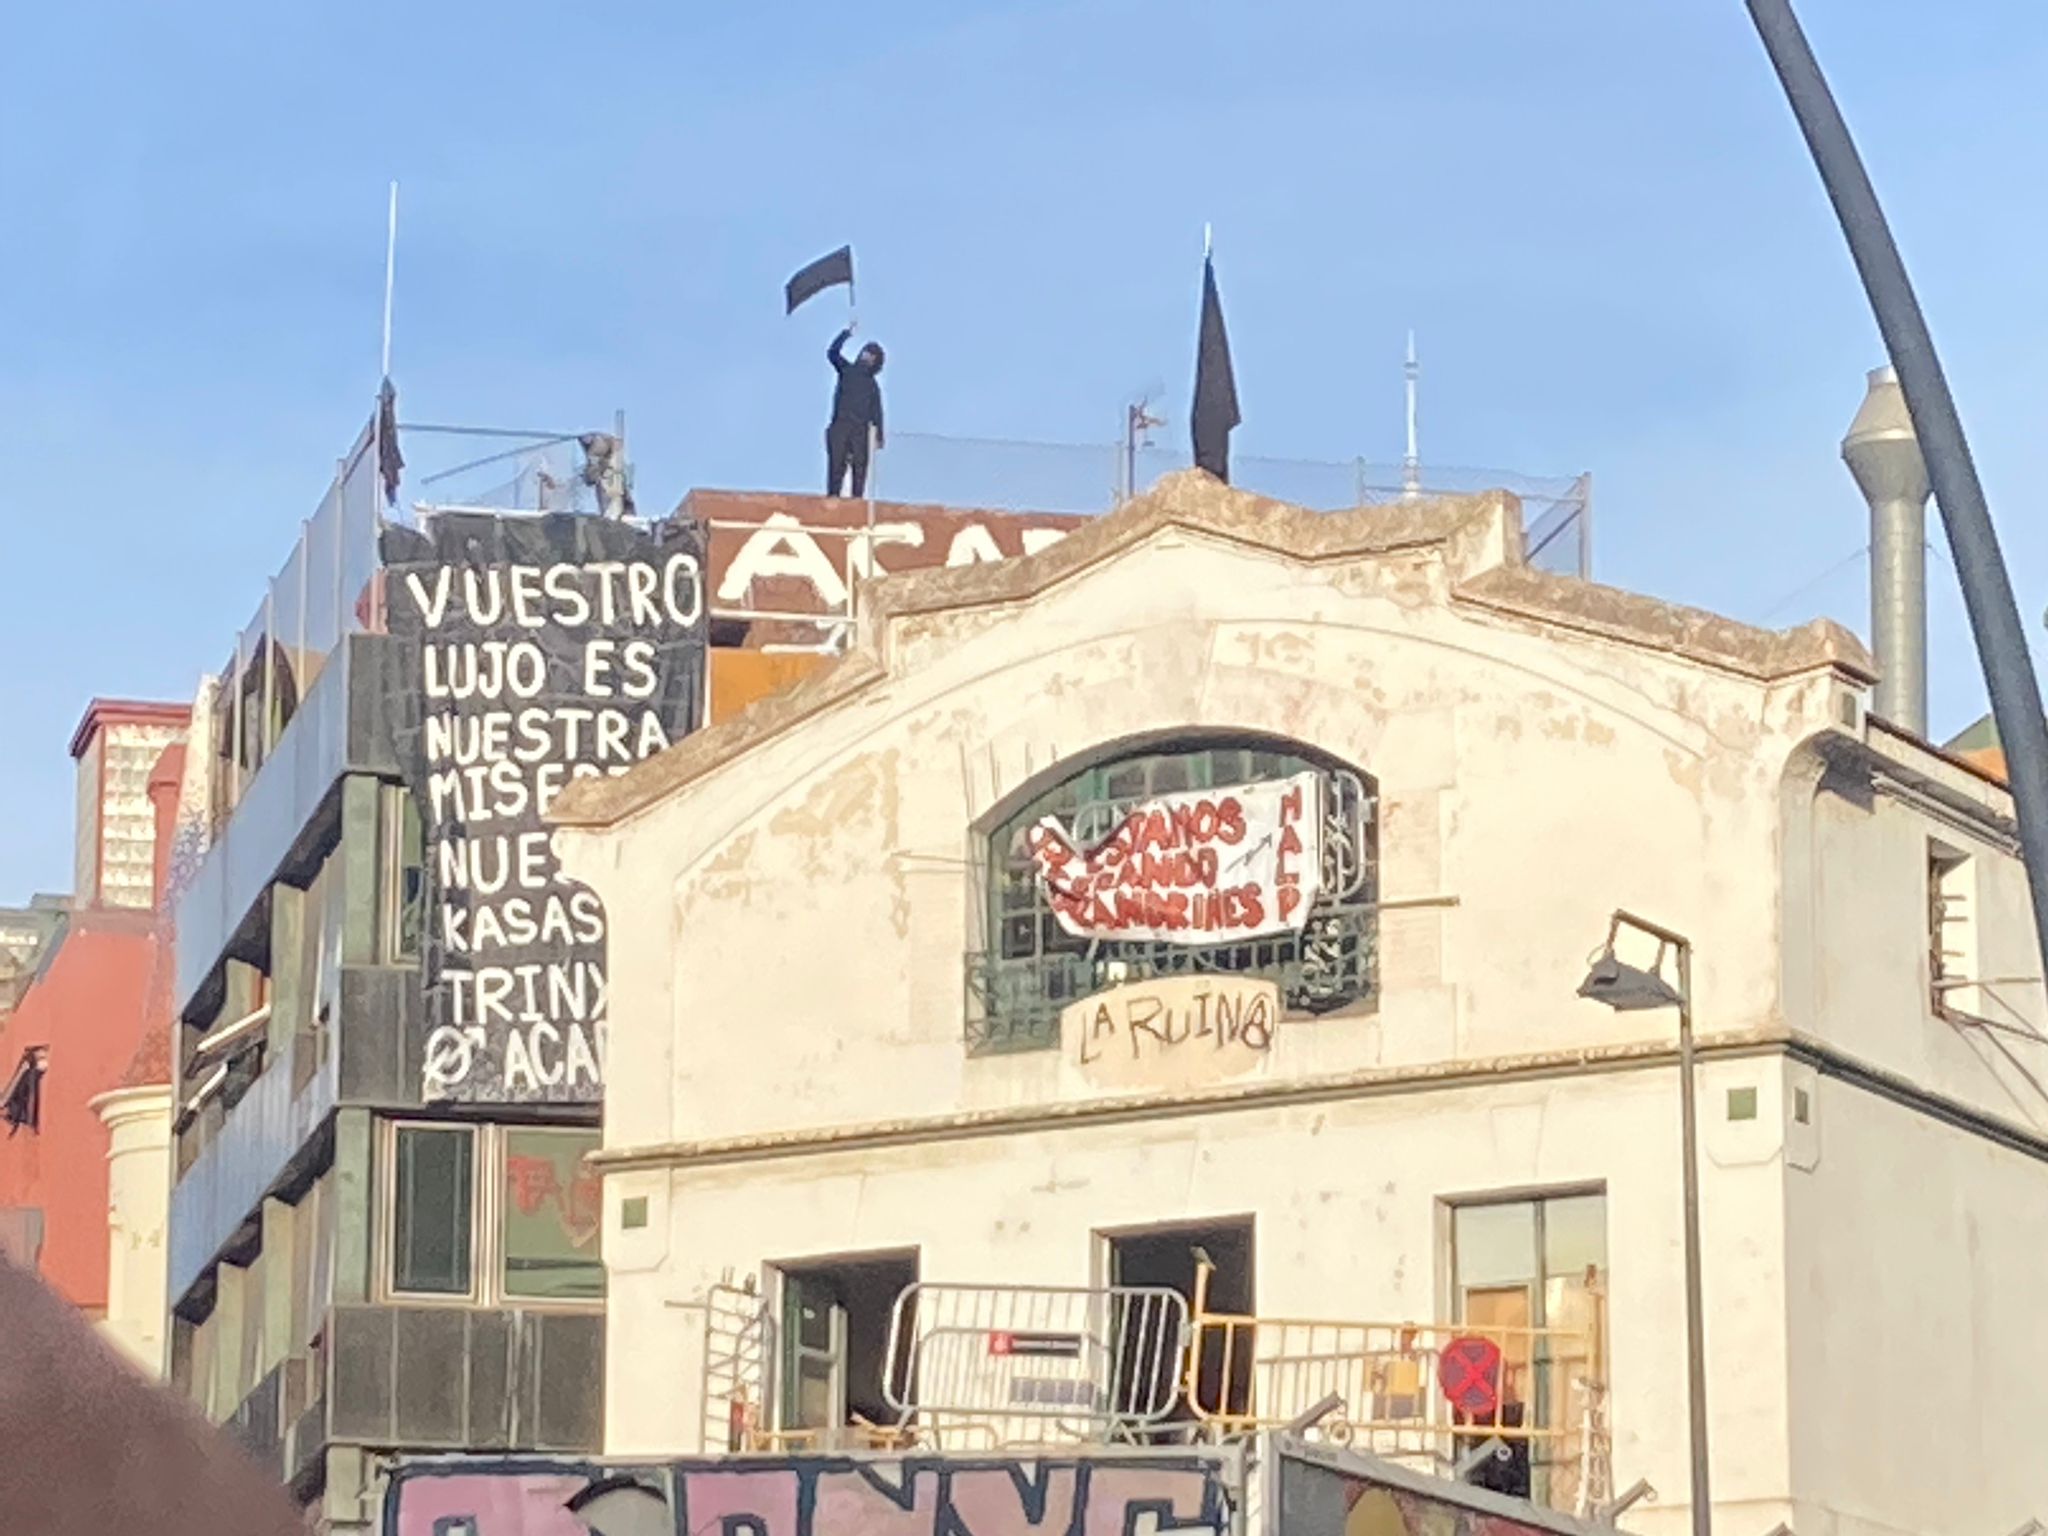 Desalojo de los okupas de Bonanova de Barcelona: últimas noticias de las casas okupadas hoy